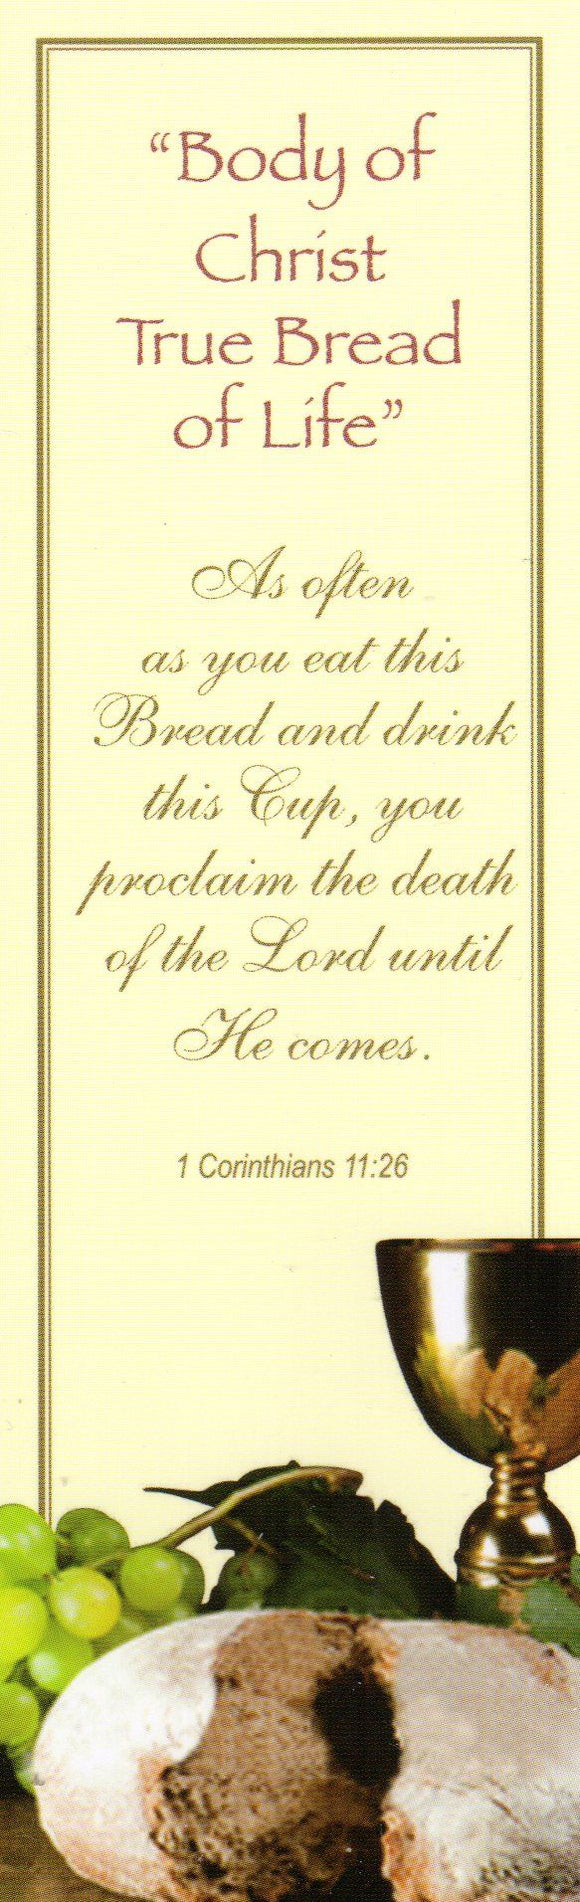 Bookmark - Body of Christ, True Bread of Life